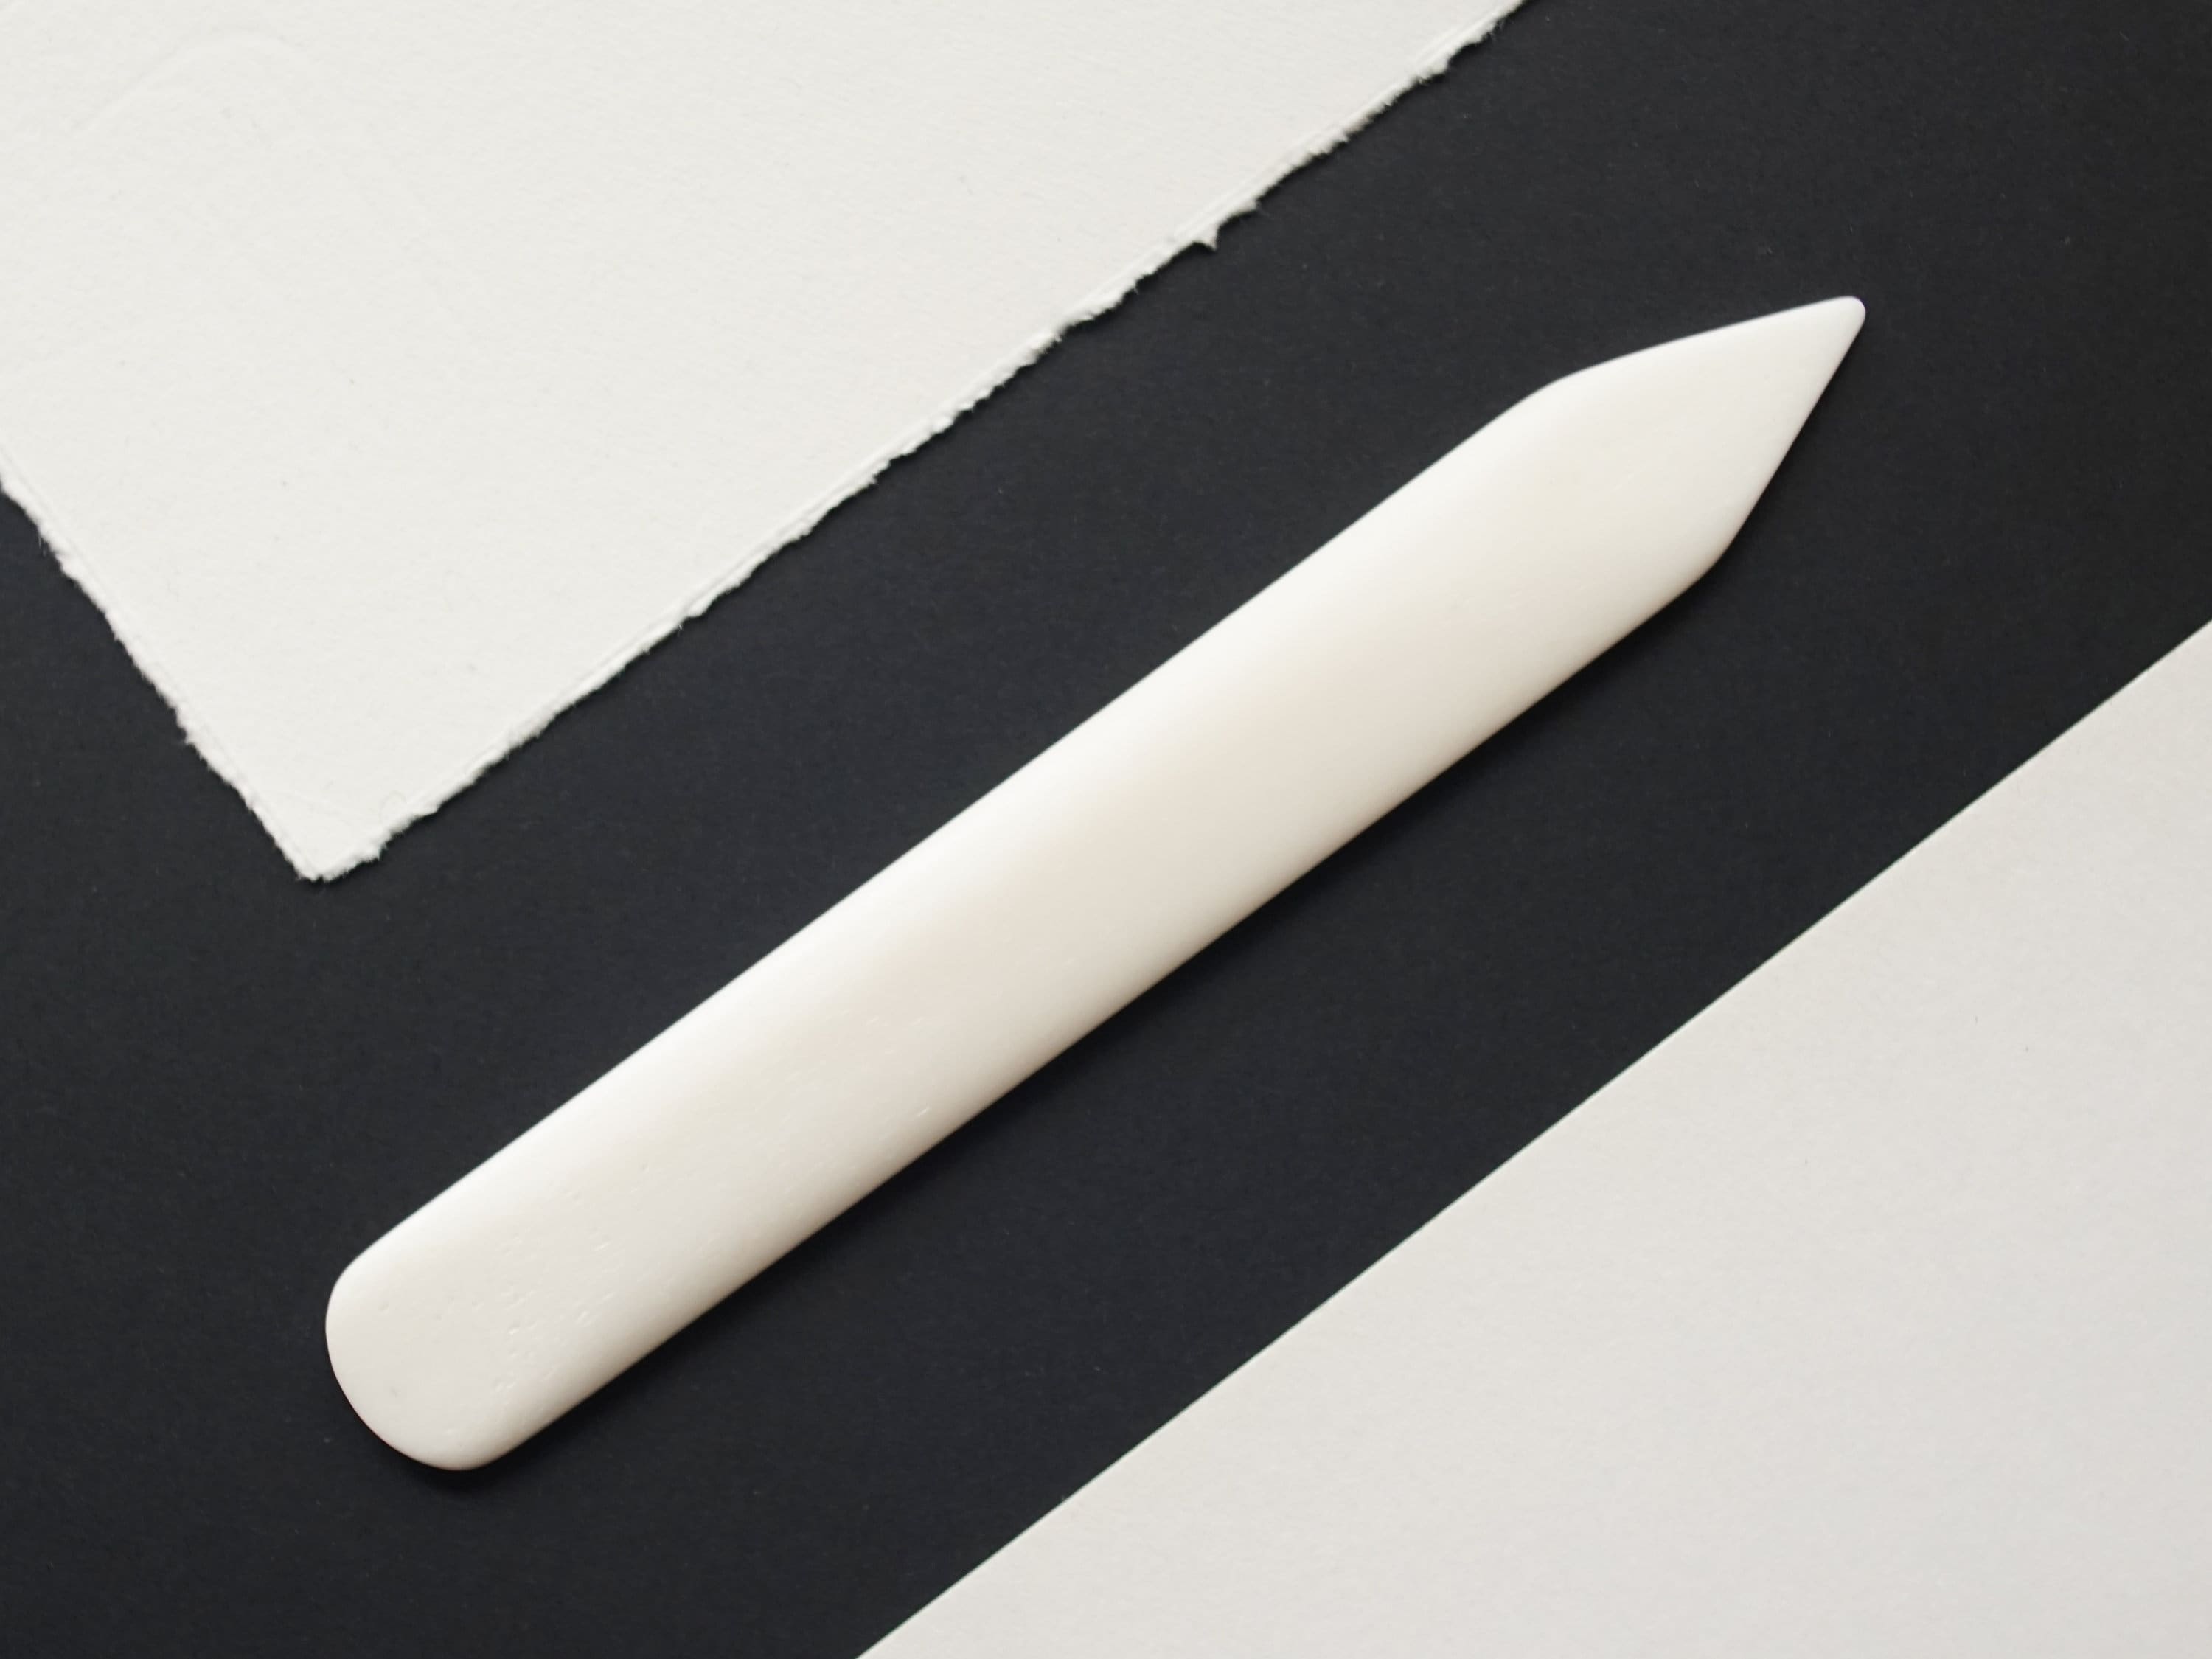 WUTA 100% Genuine Bone Folder Tools Origami Paper Folding Scoring Board  Creasing Bookbinding for DIY Cards Leather Craft 2Pcs